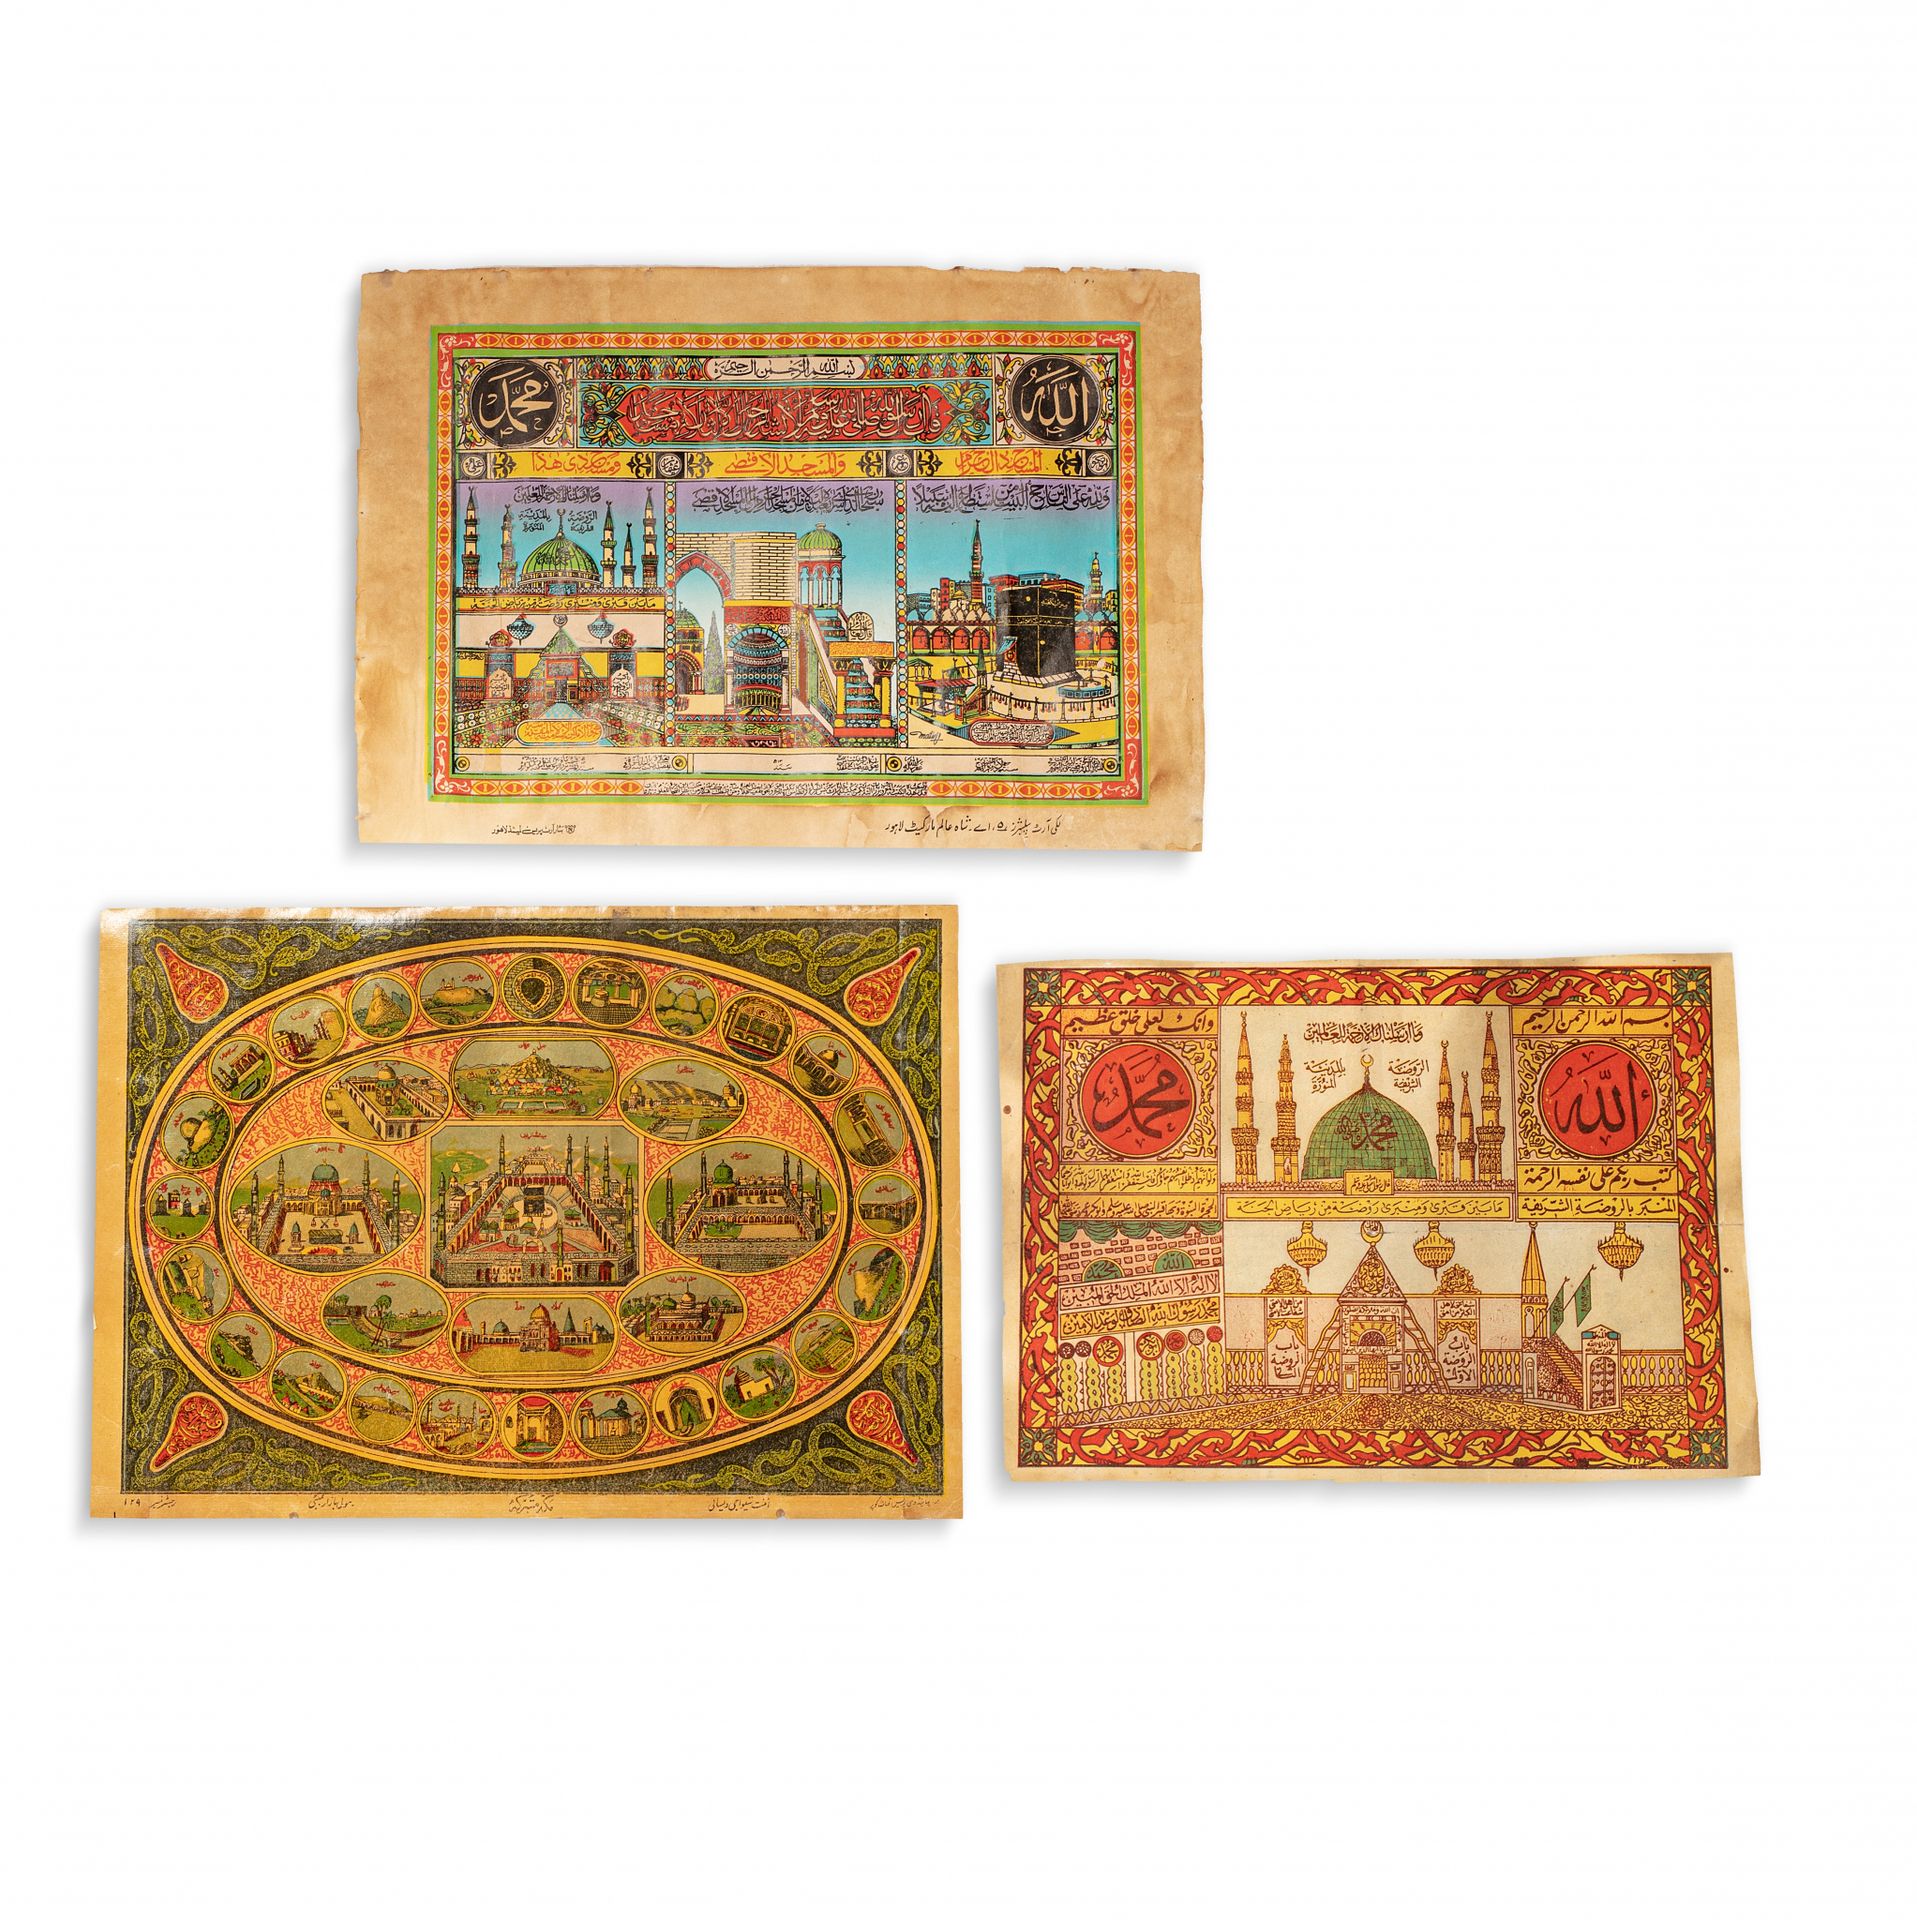 Trois certificats du Hajj 印度，拉合尔等地，19世纪末-20世纪初

三份旨在证明持有人完成朝圣之旅的印刷文件，用大量的小插图描绘了朝&hellip;